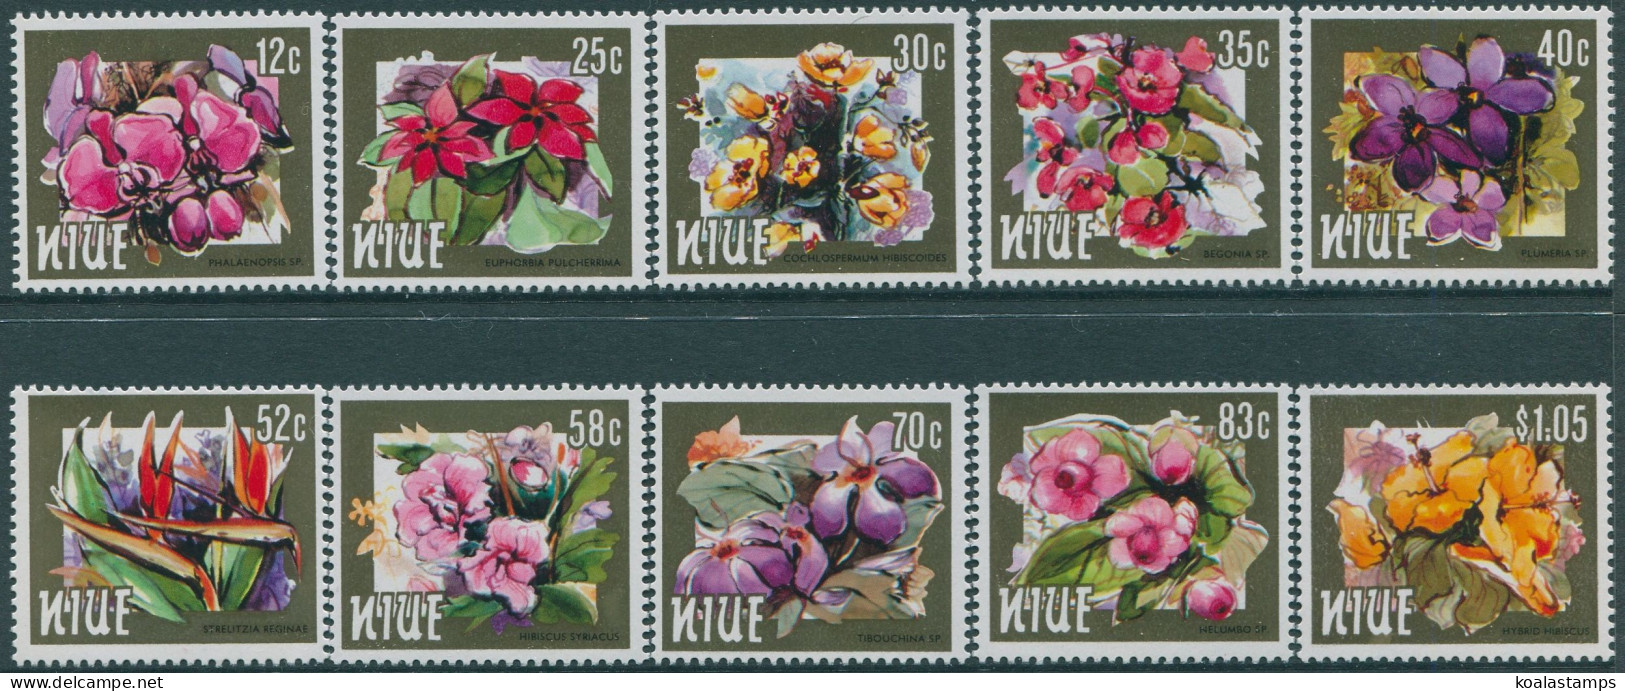 Niue 1984 SG527-536 Flowers (10) MNH - Niue